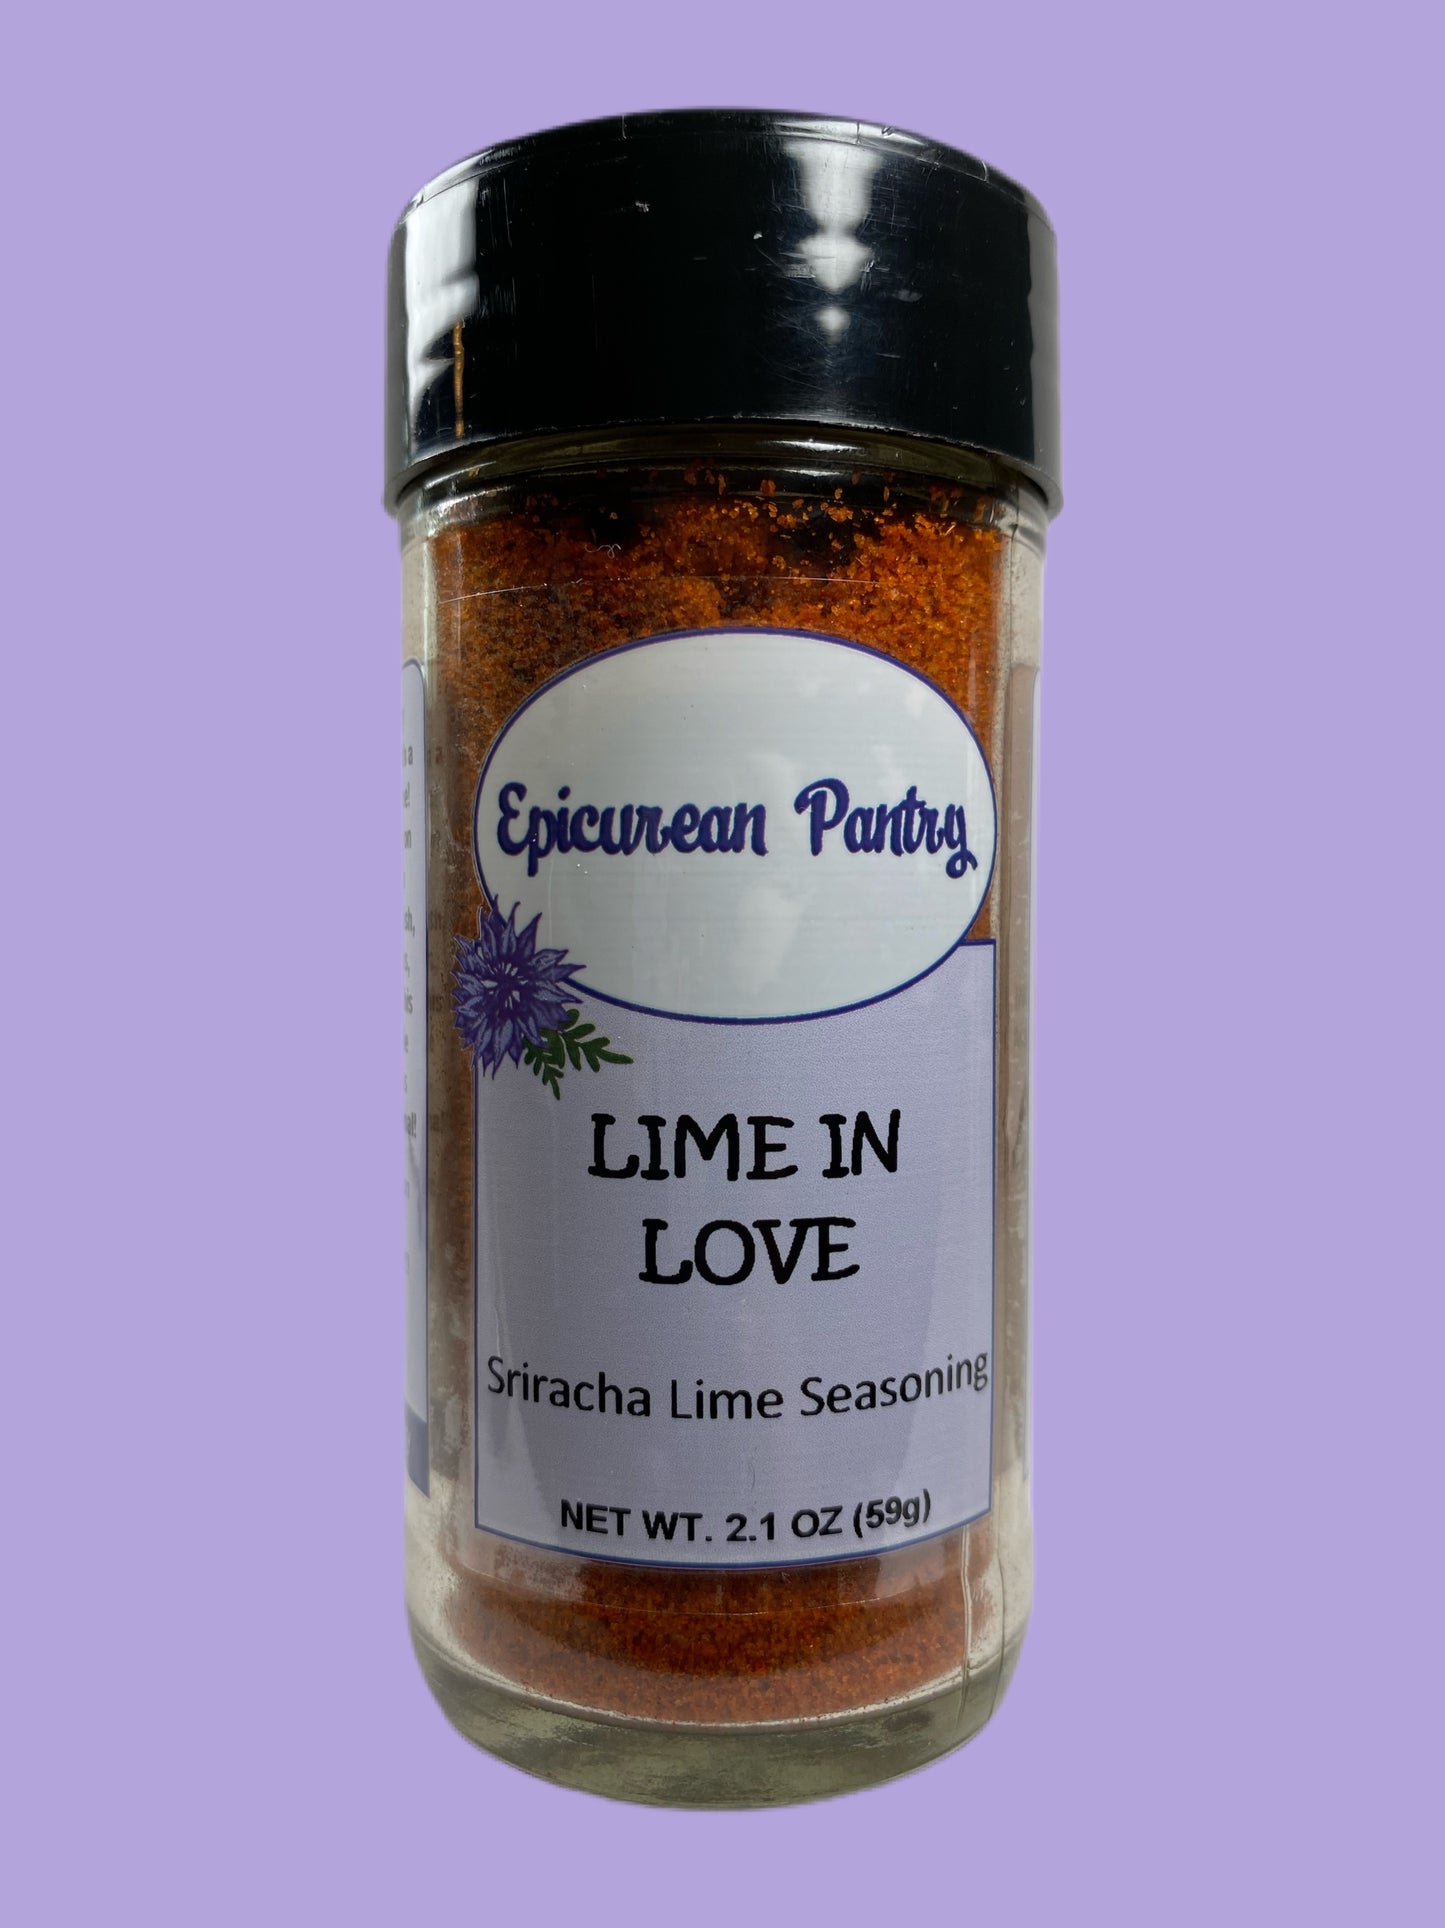 Lime in Love - Sriracha Lime Seasoning - 2.1 oz net wt